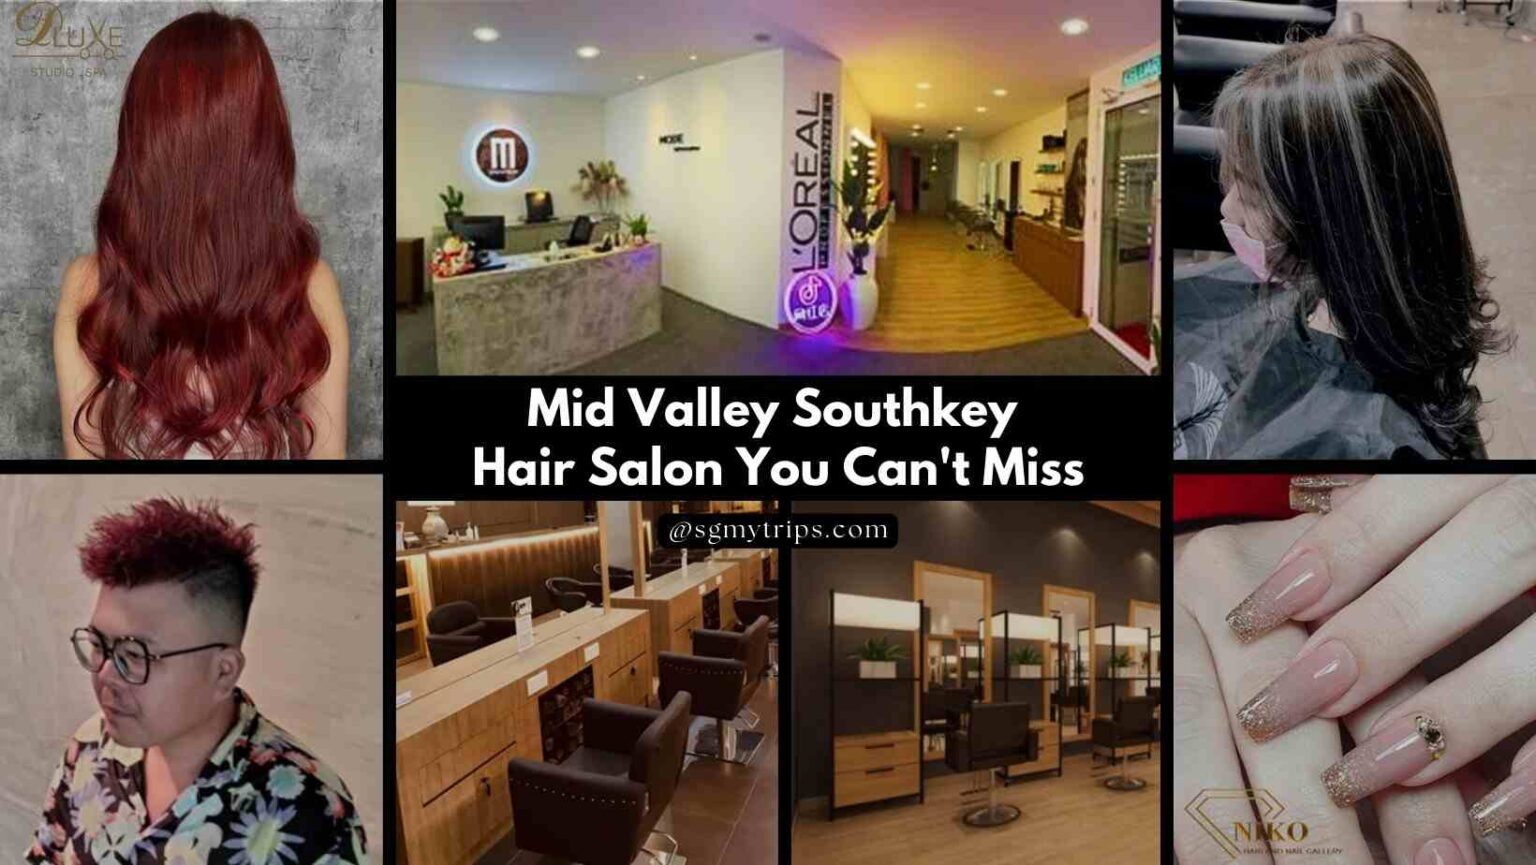 Mid Valley Southkey Hair Salon 1536x865 